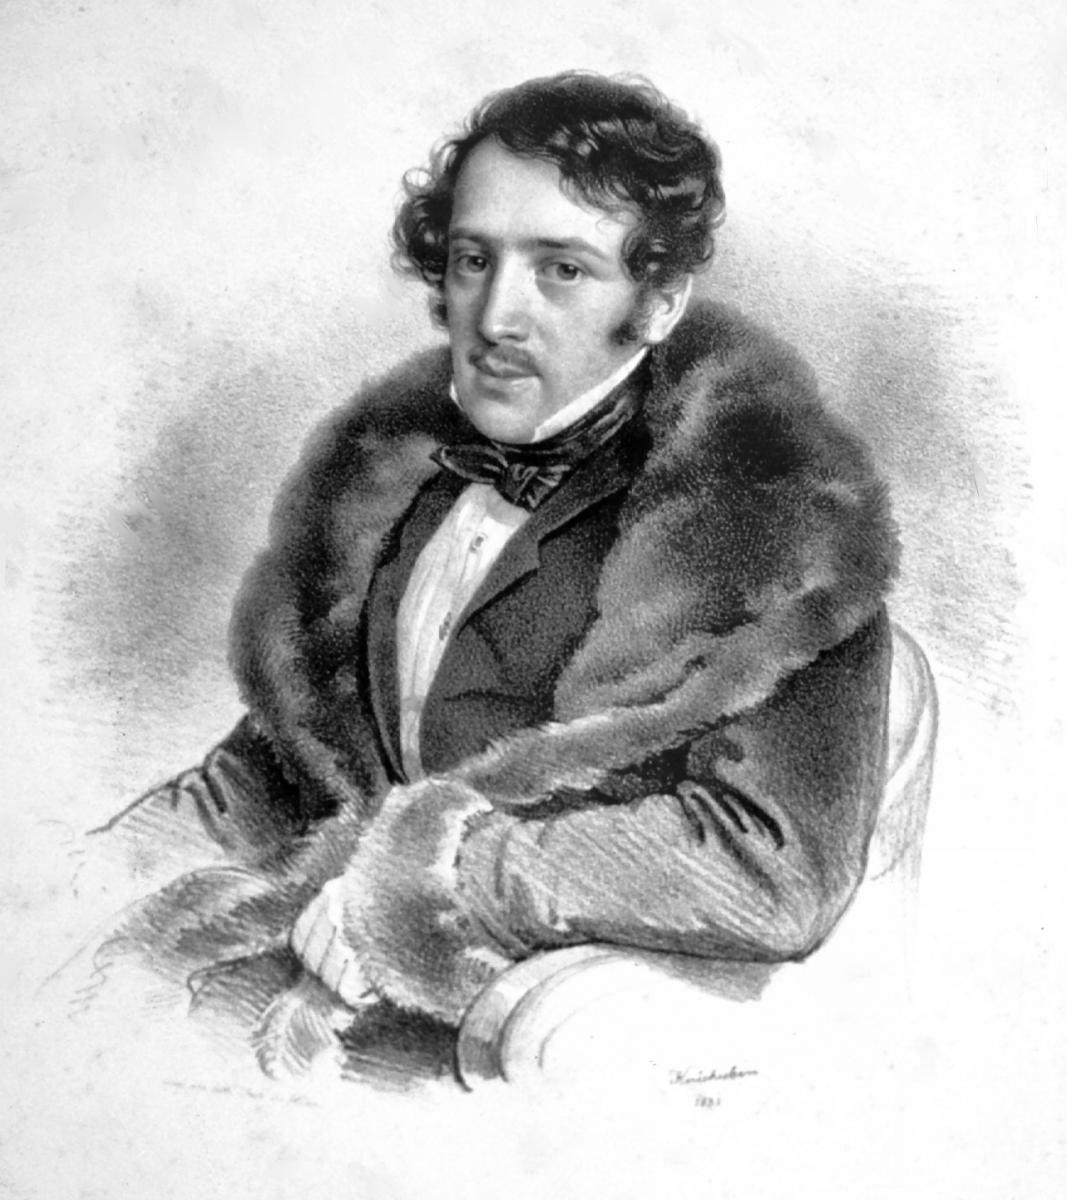 Josef Dessauer